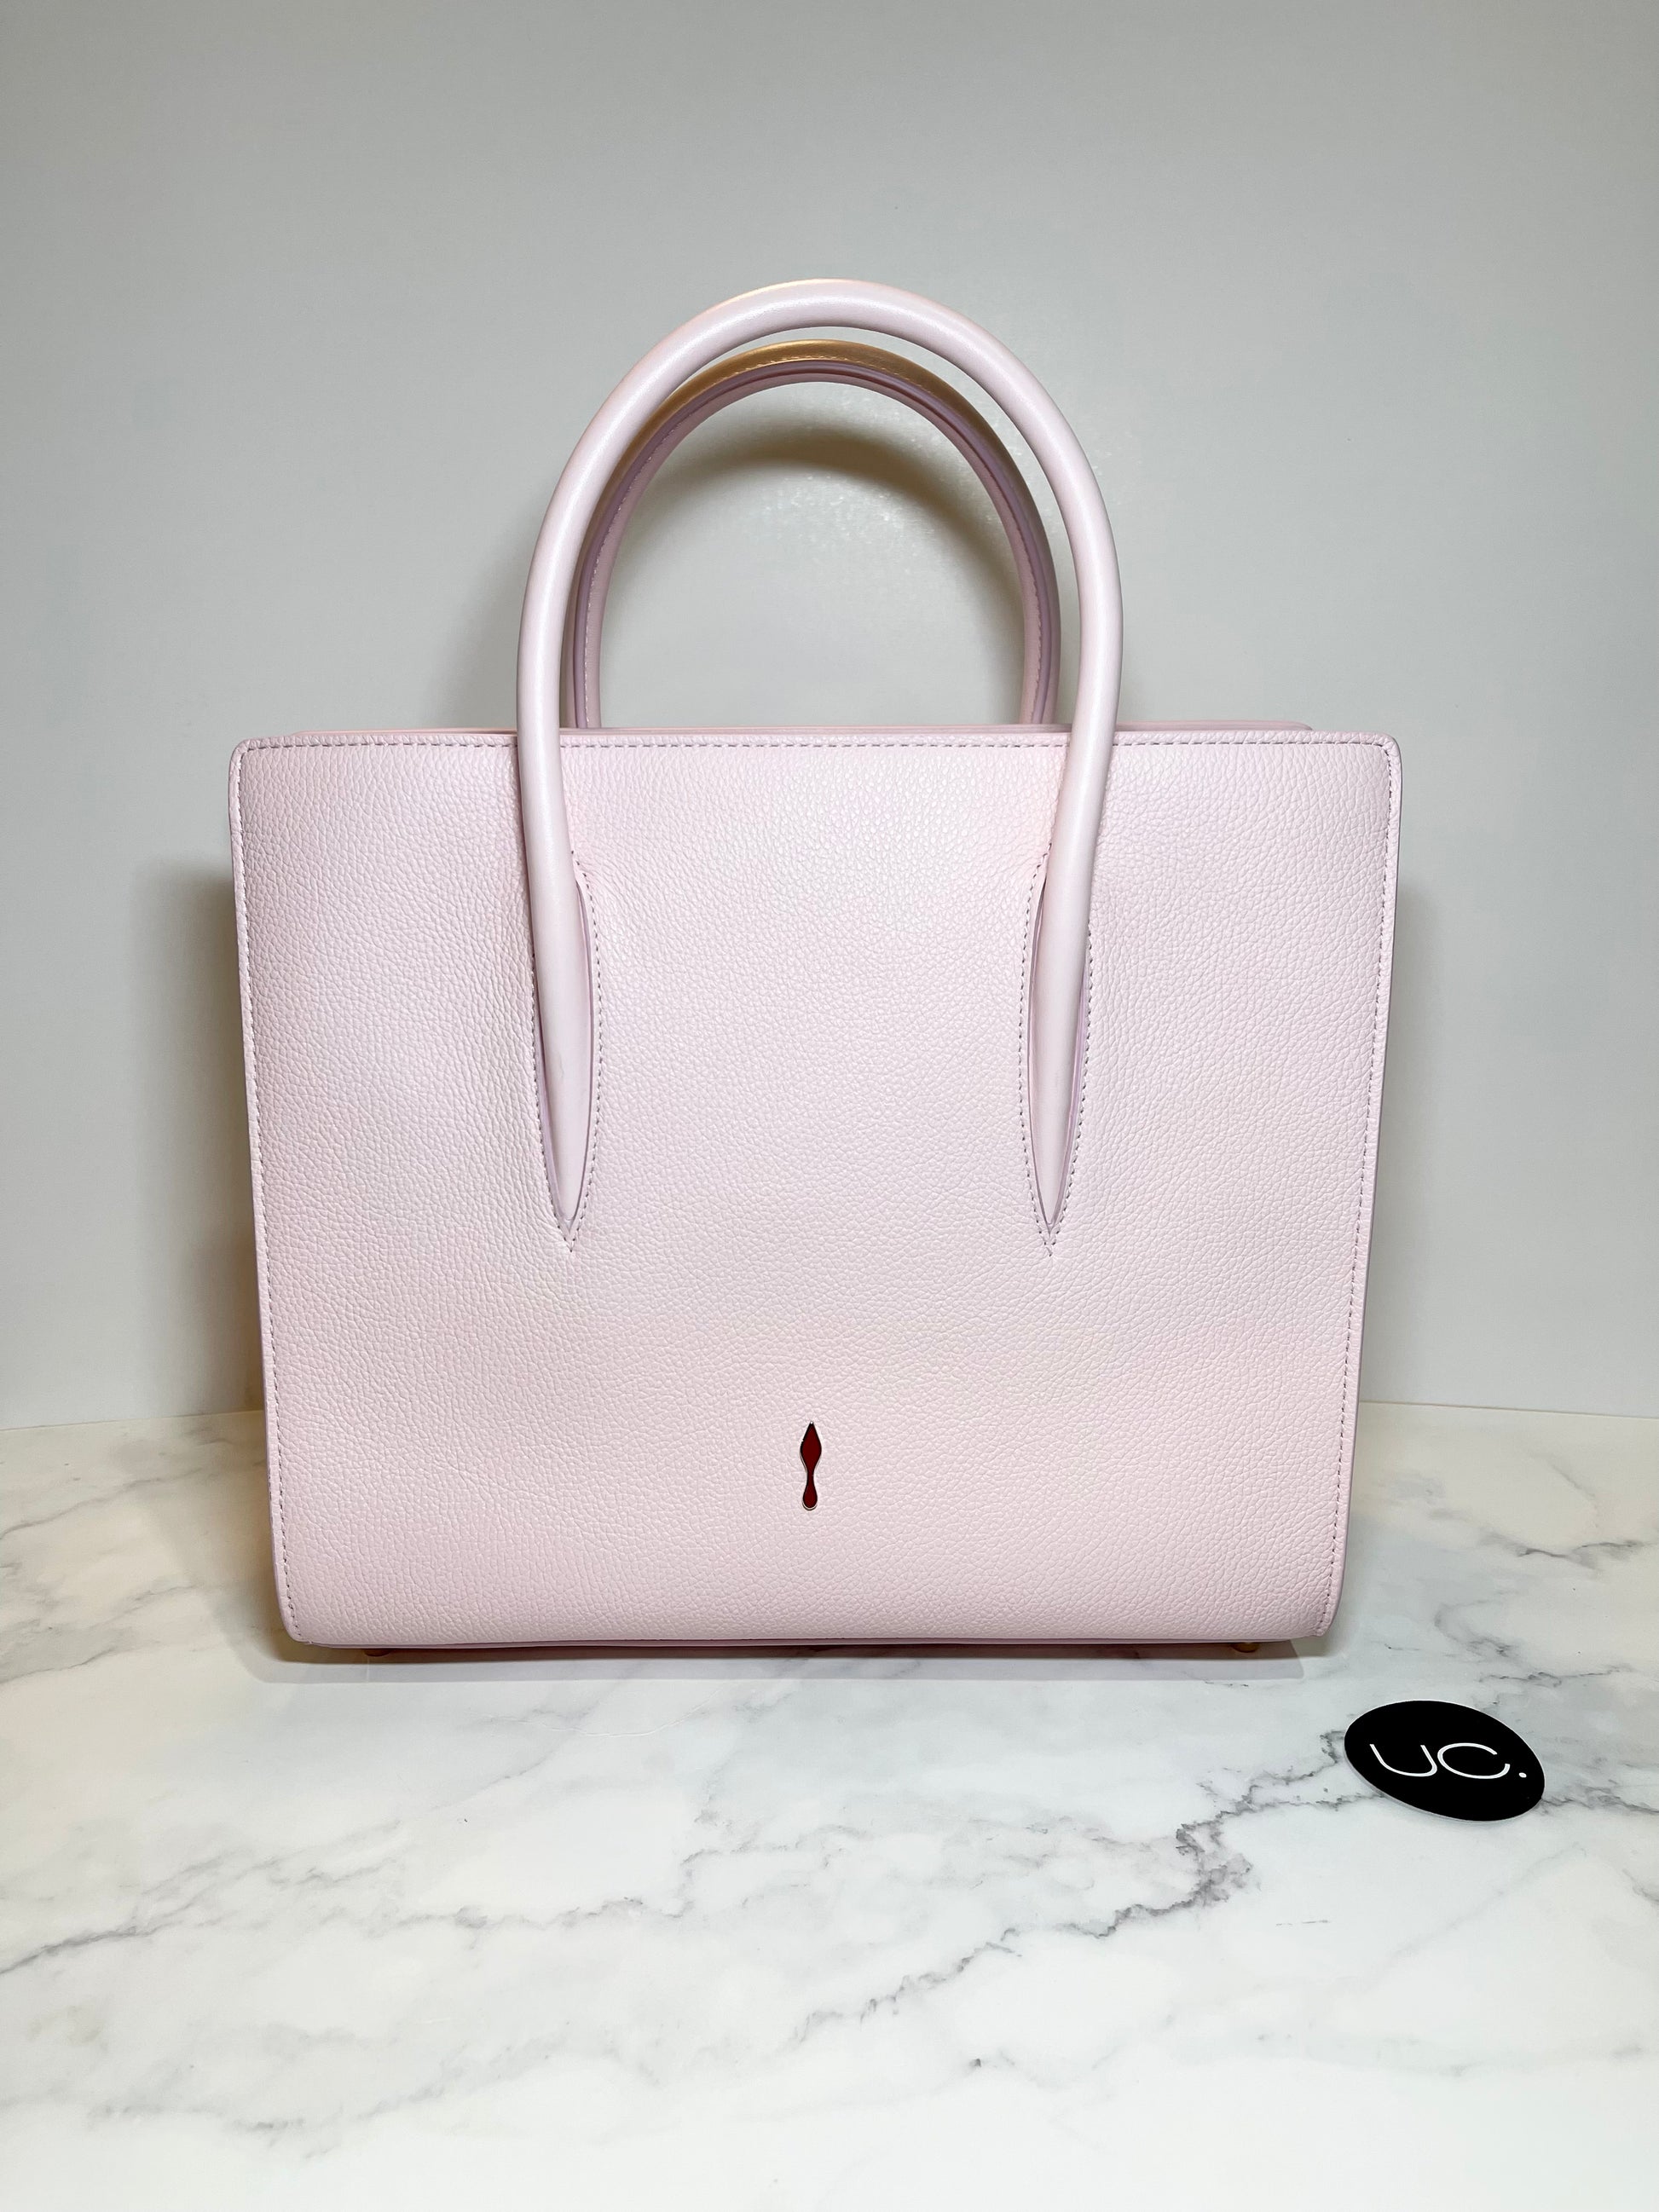 Christian Louboutin Paloma Medium Top Handle Bag in Pink